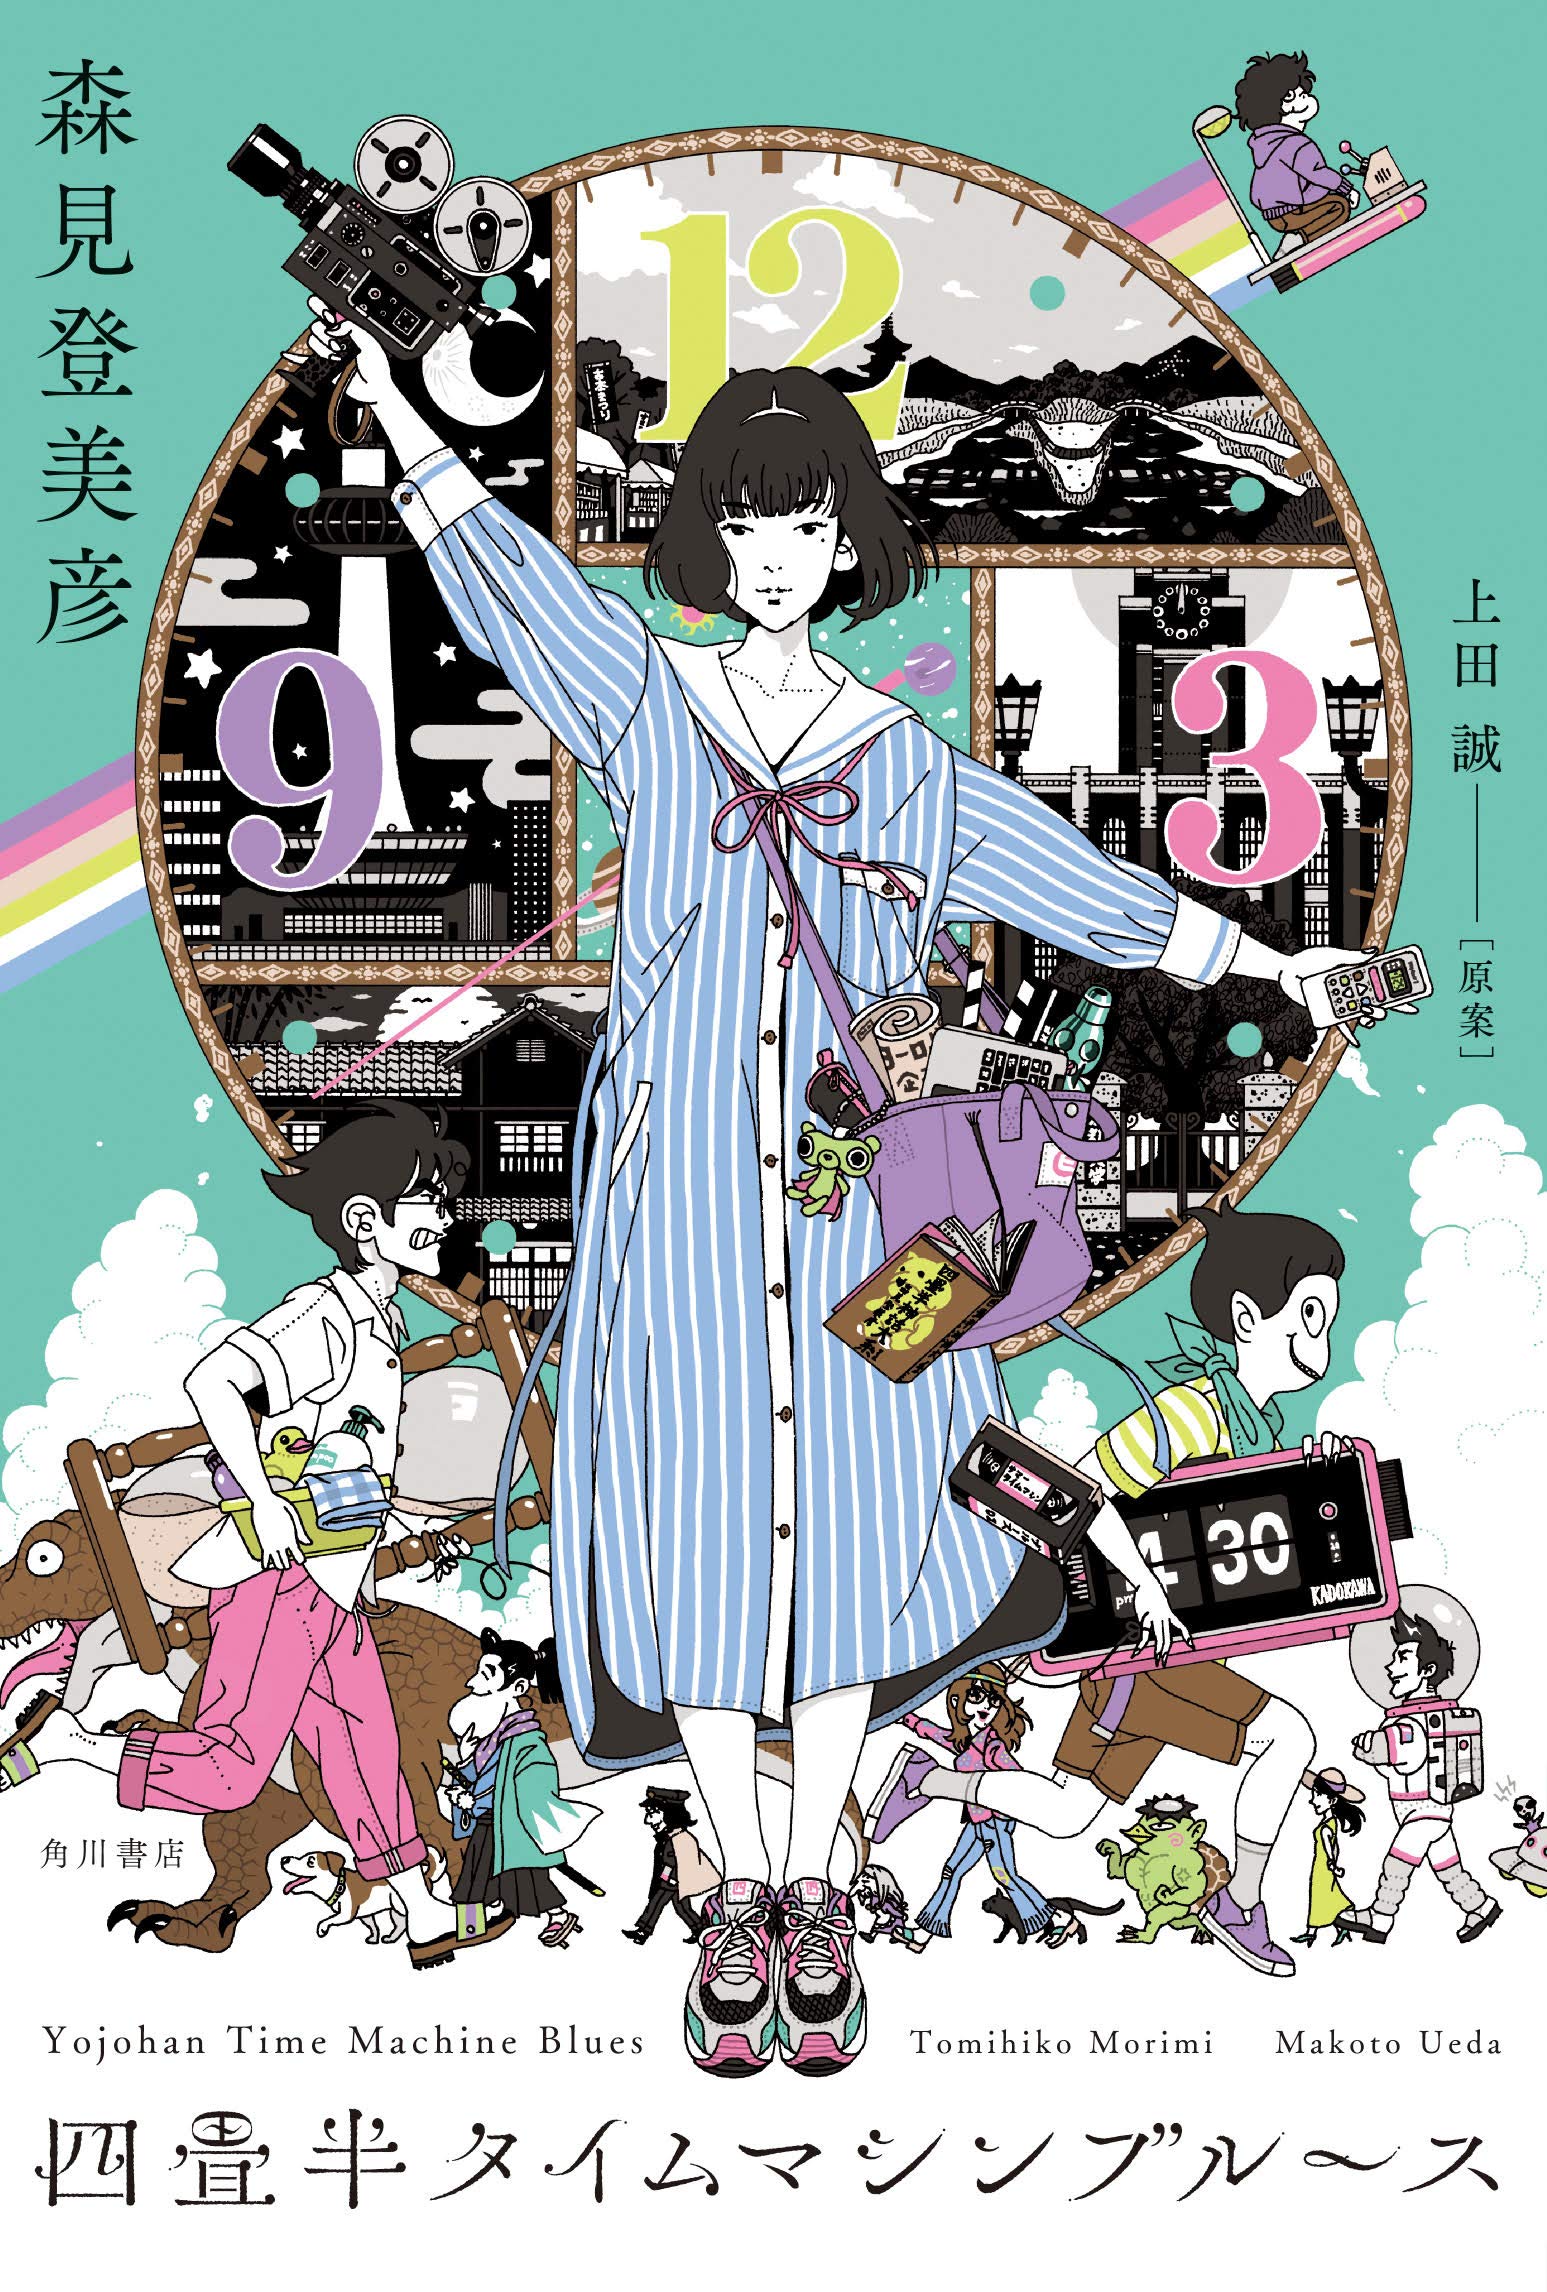 Yojohan-KV Anime Movie "Yojohan Time Machine Blues" Reveals Cast and Visual, Coming to Theaters and Disney+ in 2022